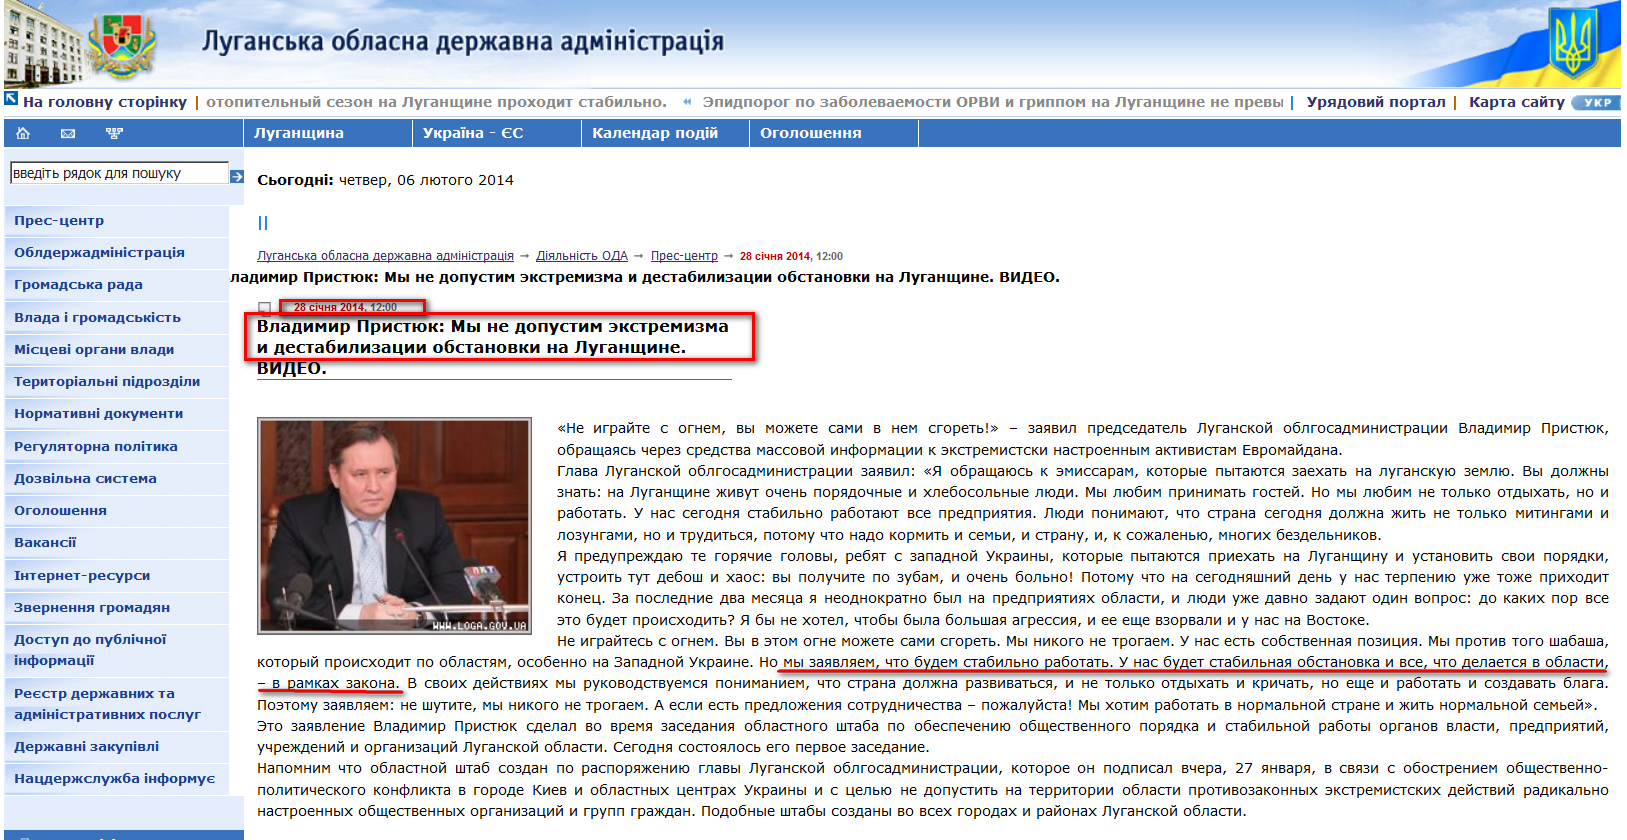 http://www.loga.gov.ua/oda/press/news/2014/01/28/news_63498.html